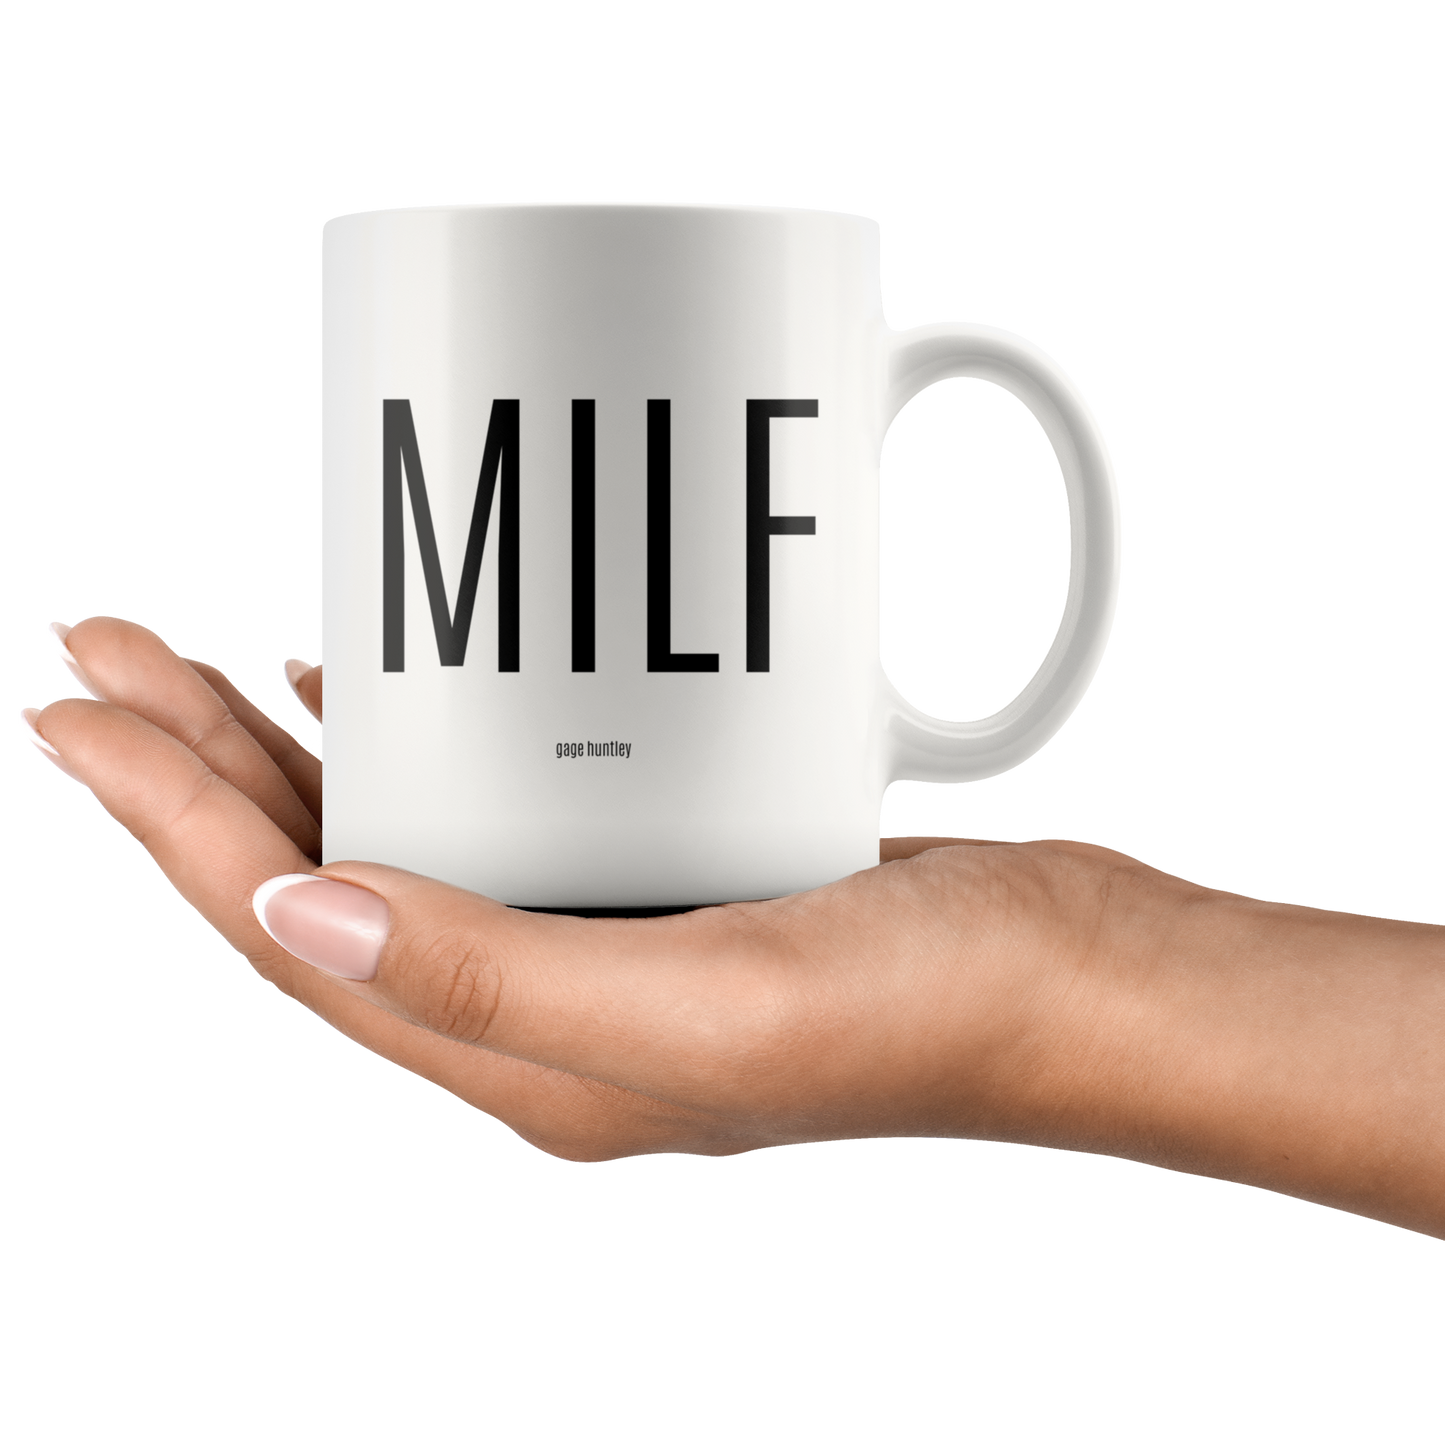 MILF- Coffee Mug